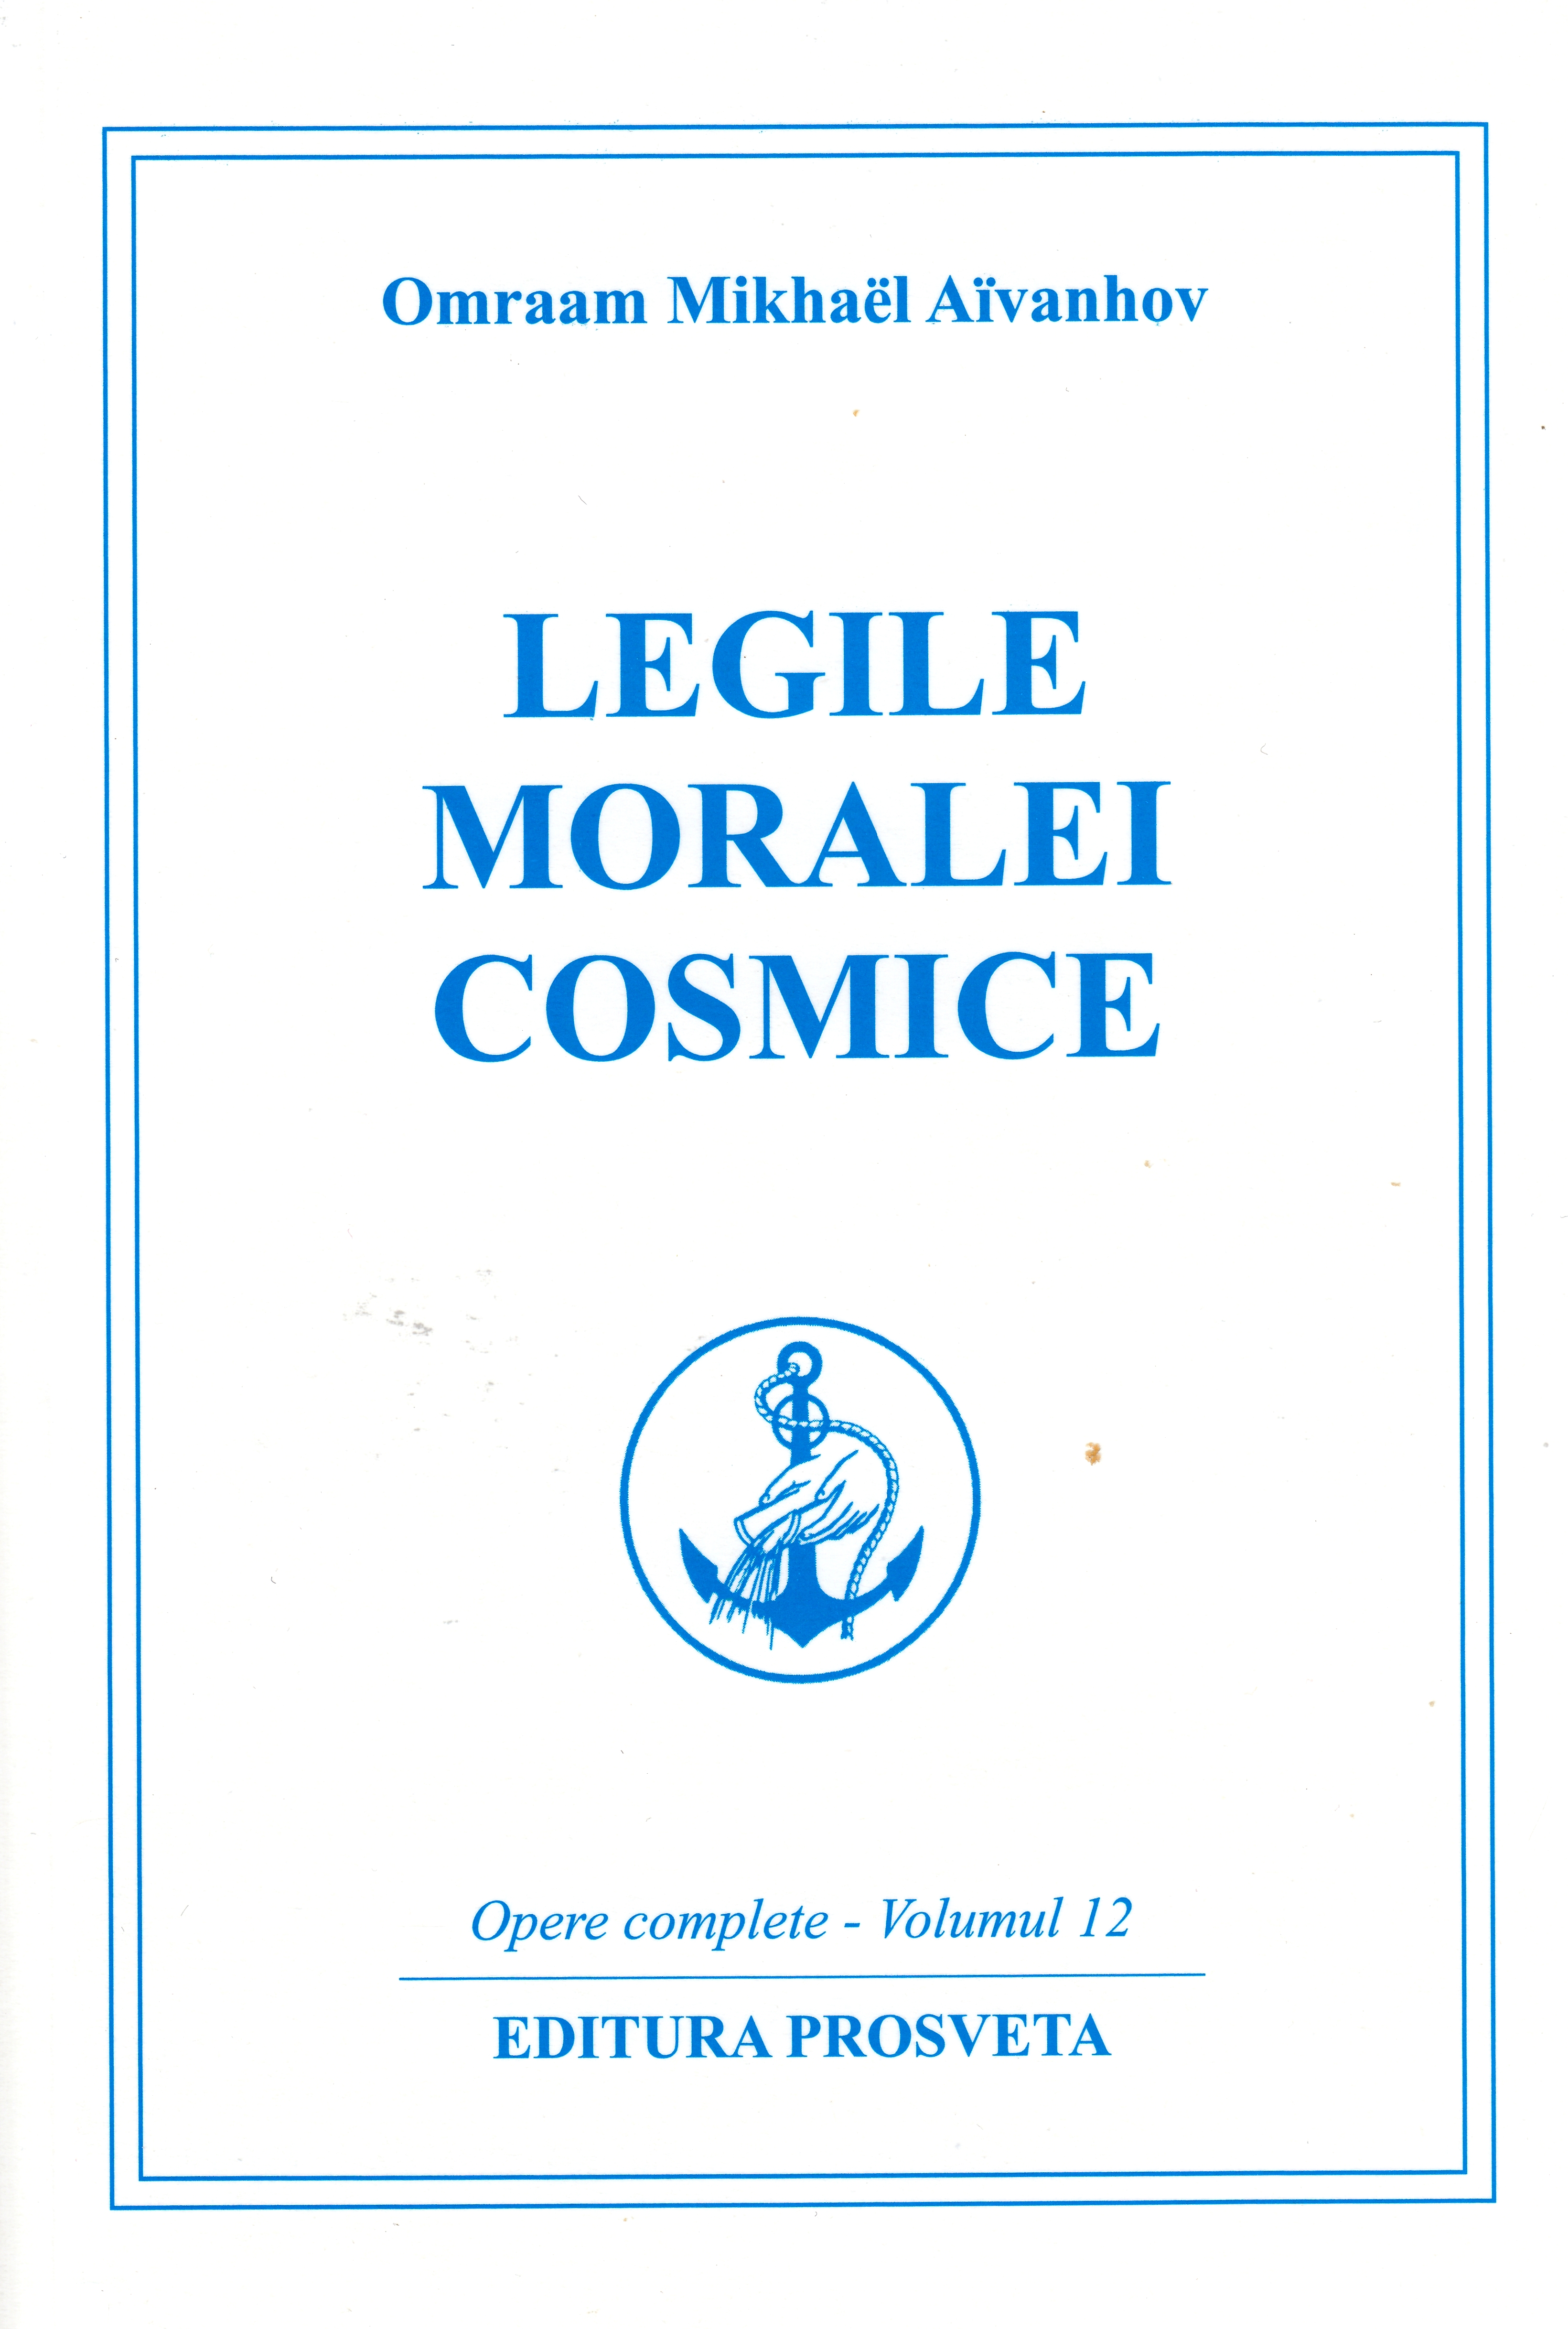 Legile moralei cosmice - Omraam Mikhael Aivanhov